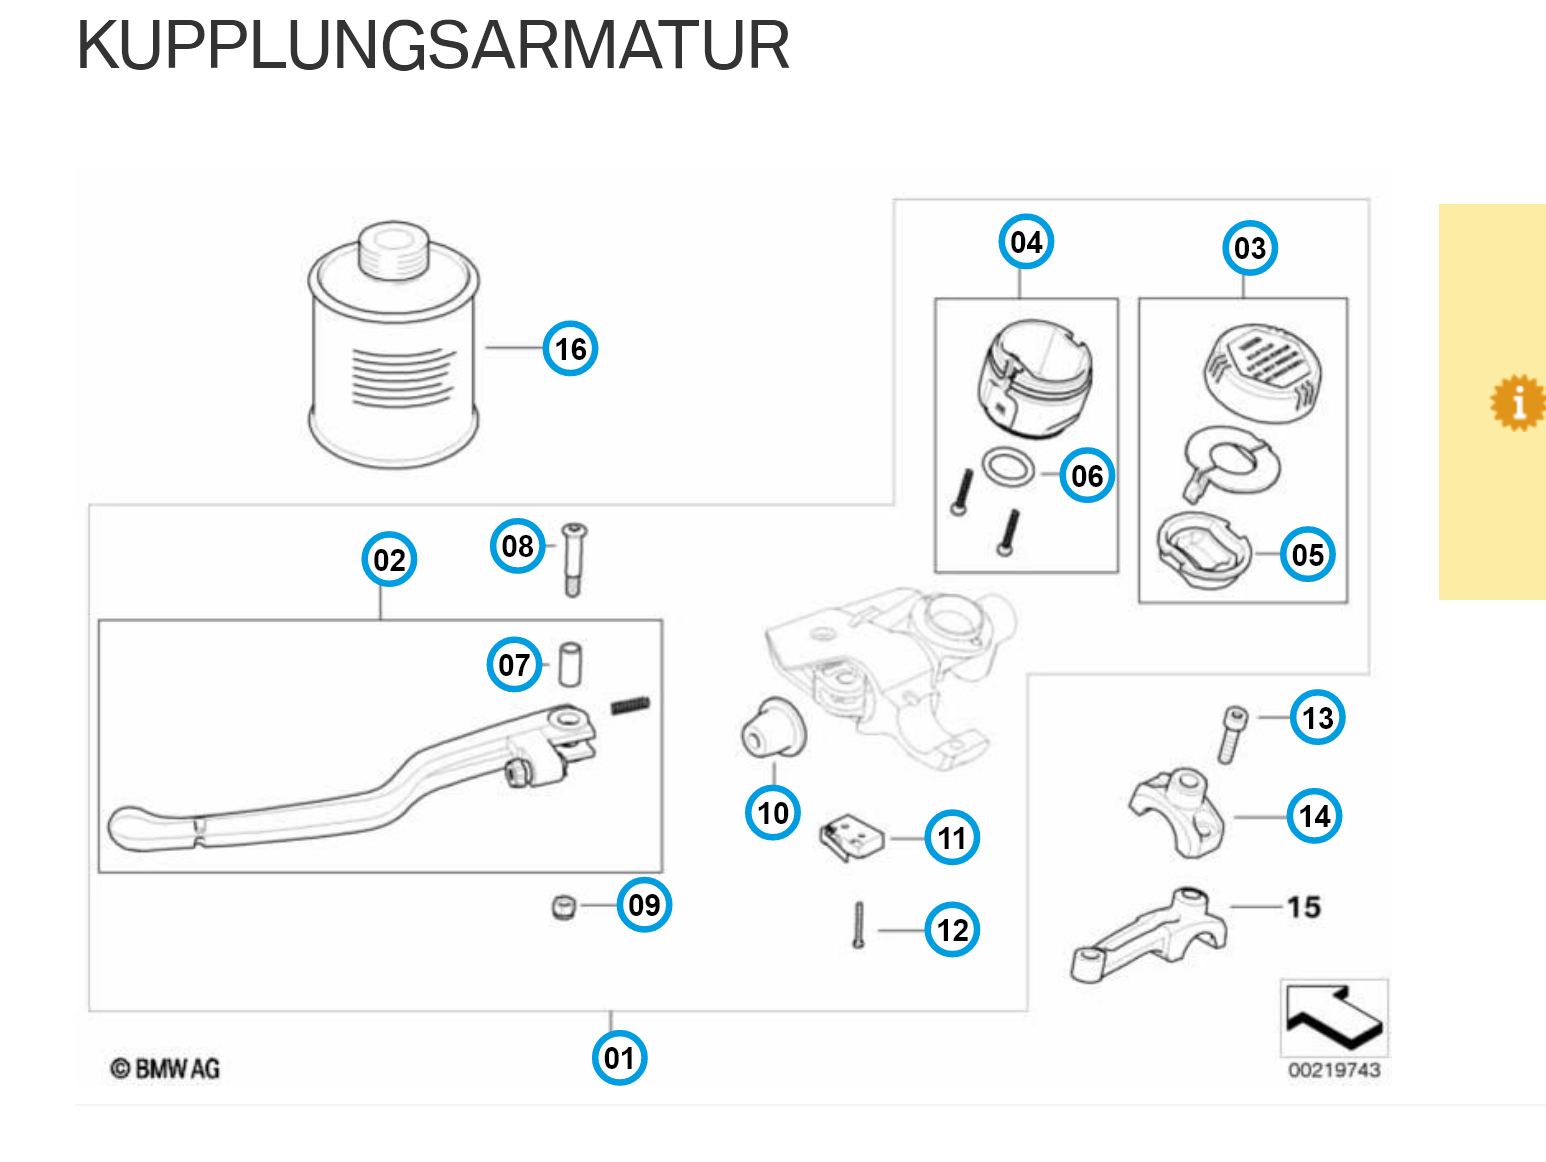 Screenshot_2020-12-08 Kupplungsarmatur - BMW K25 (R 1200 GS Adventure) R 1200 GS Adve 06 (0382...png